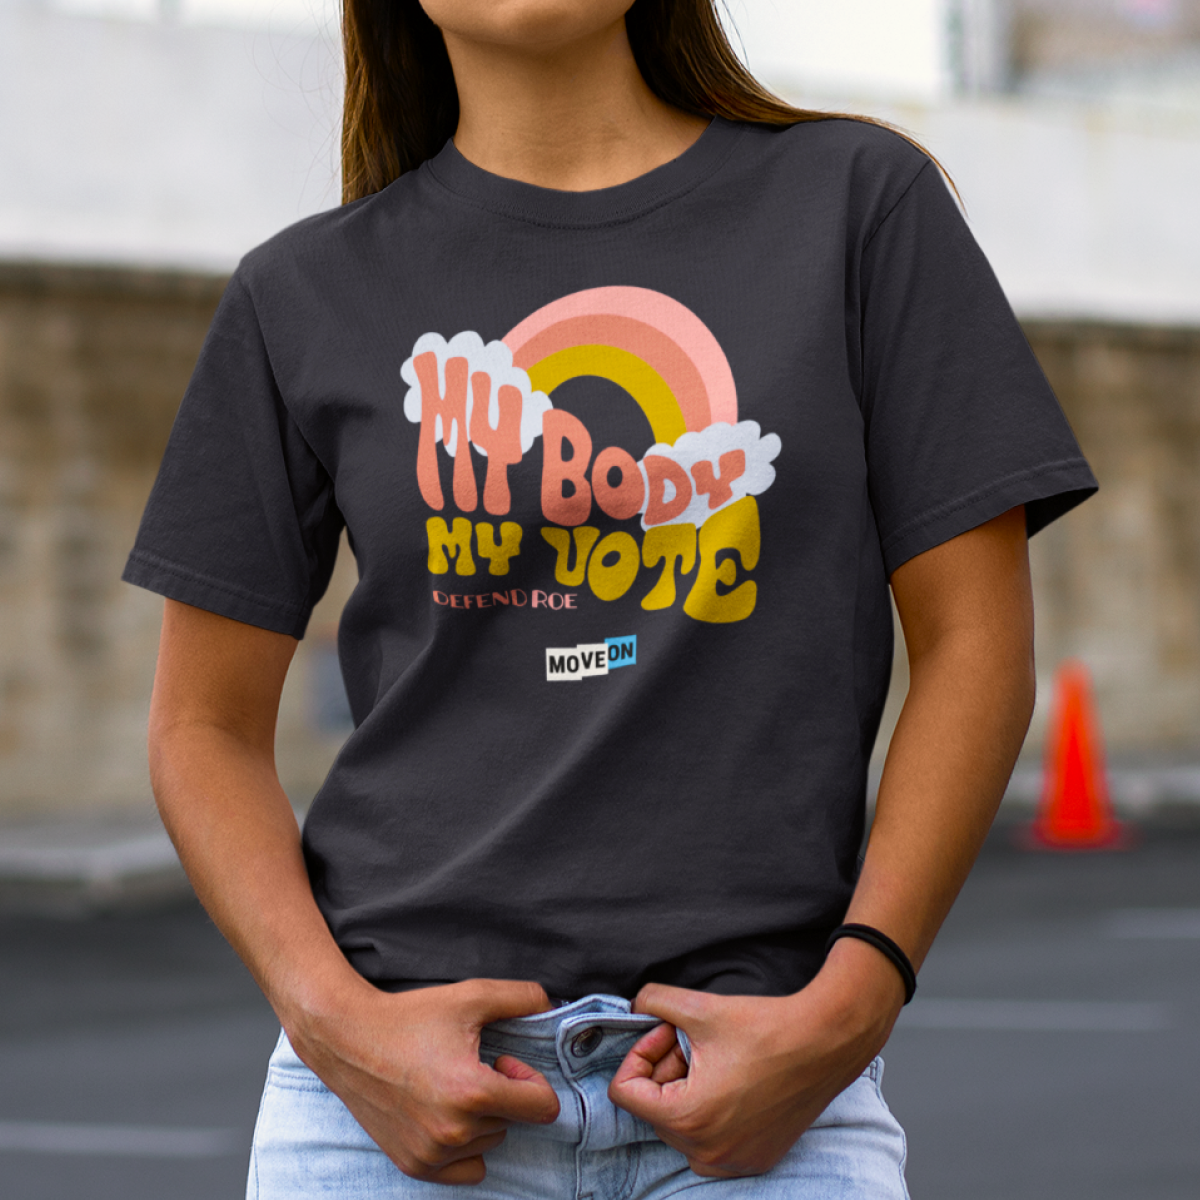 "My Body, My Vote" Unisex Cotton T-Shirt